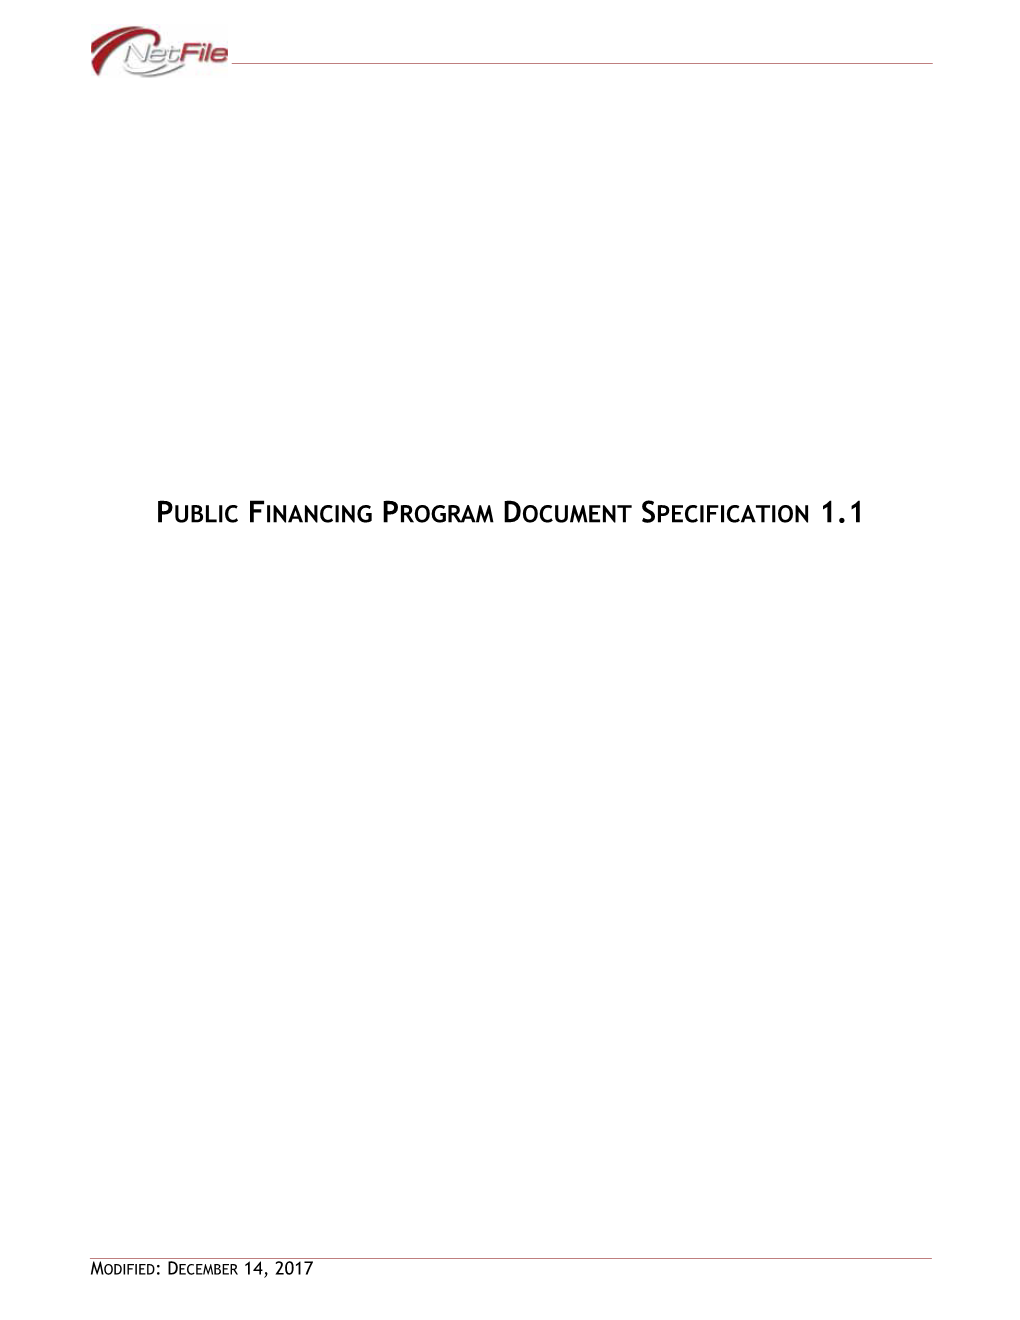 SFEC Public Financing Document Specification